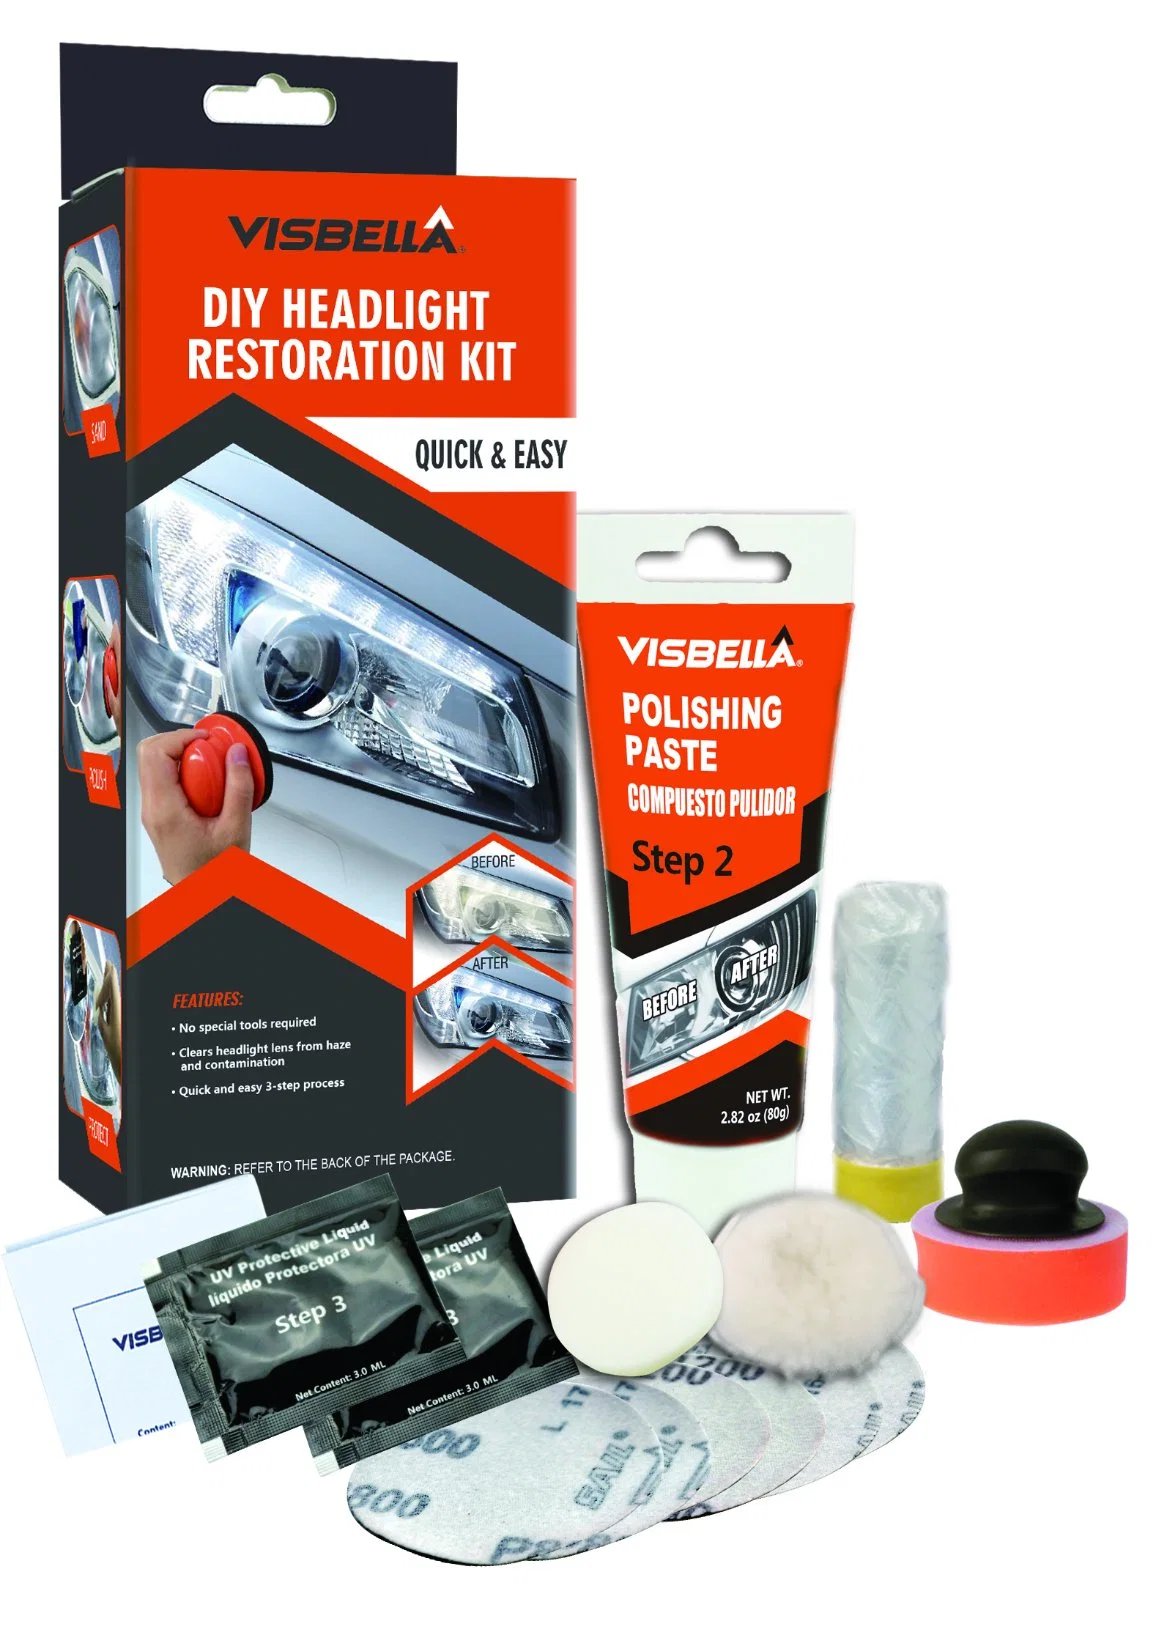 Visbella DIY Car Headlight Cleaning Headlight Restoration Kit Manual Color Box